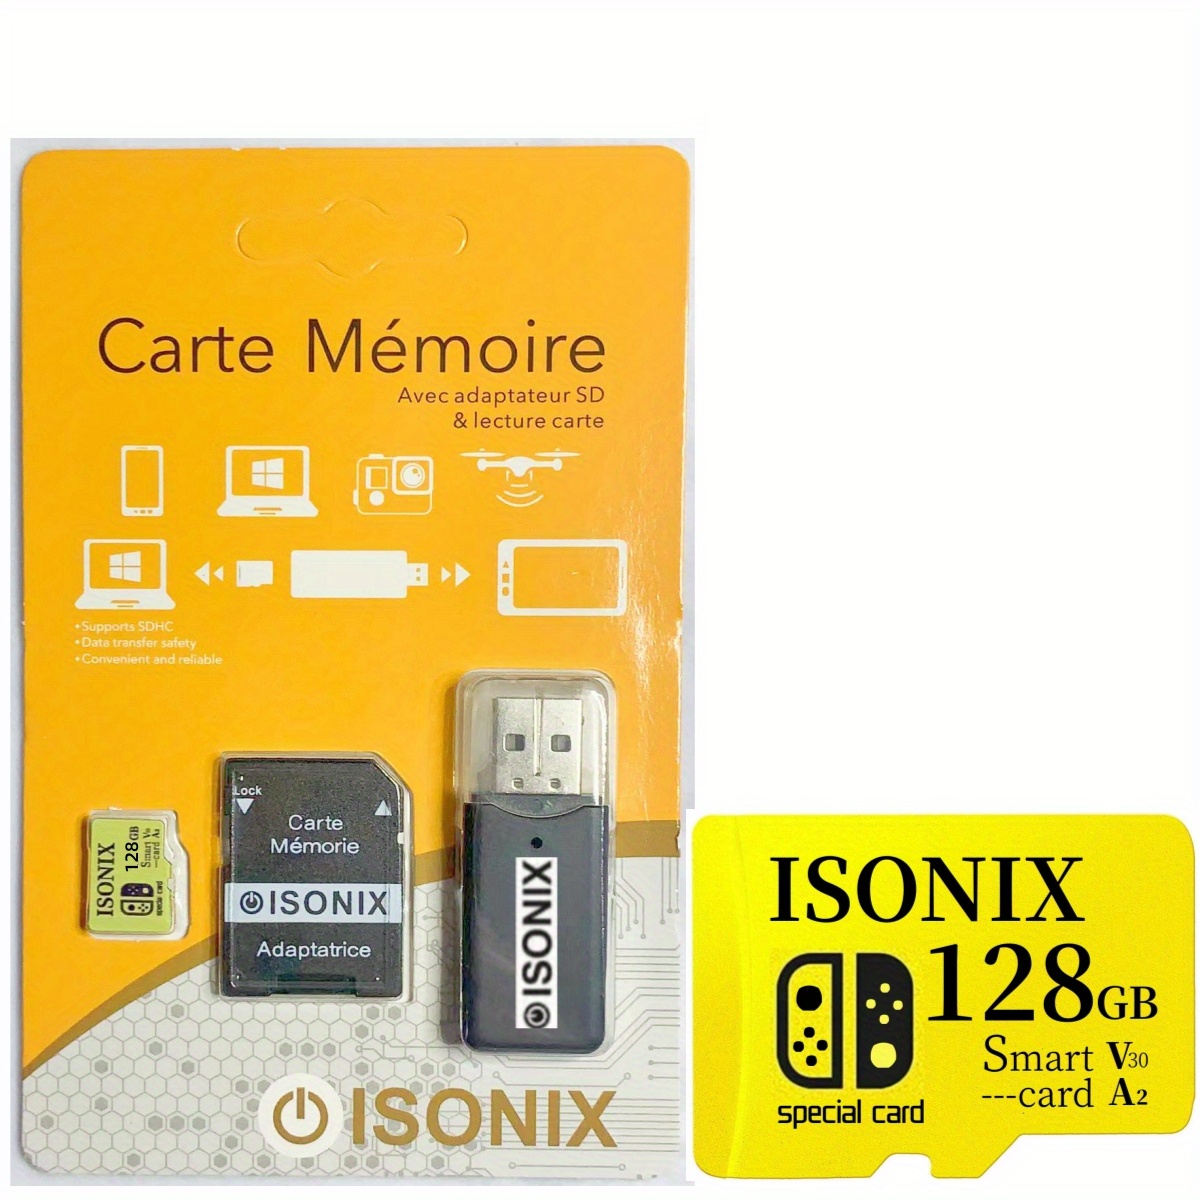 ISONIX Carte Mémoire Micro-sd 128 go Micro SDHC/SDXC + Adaptateur